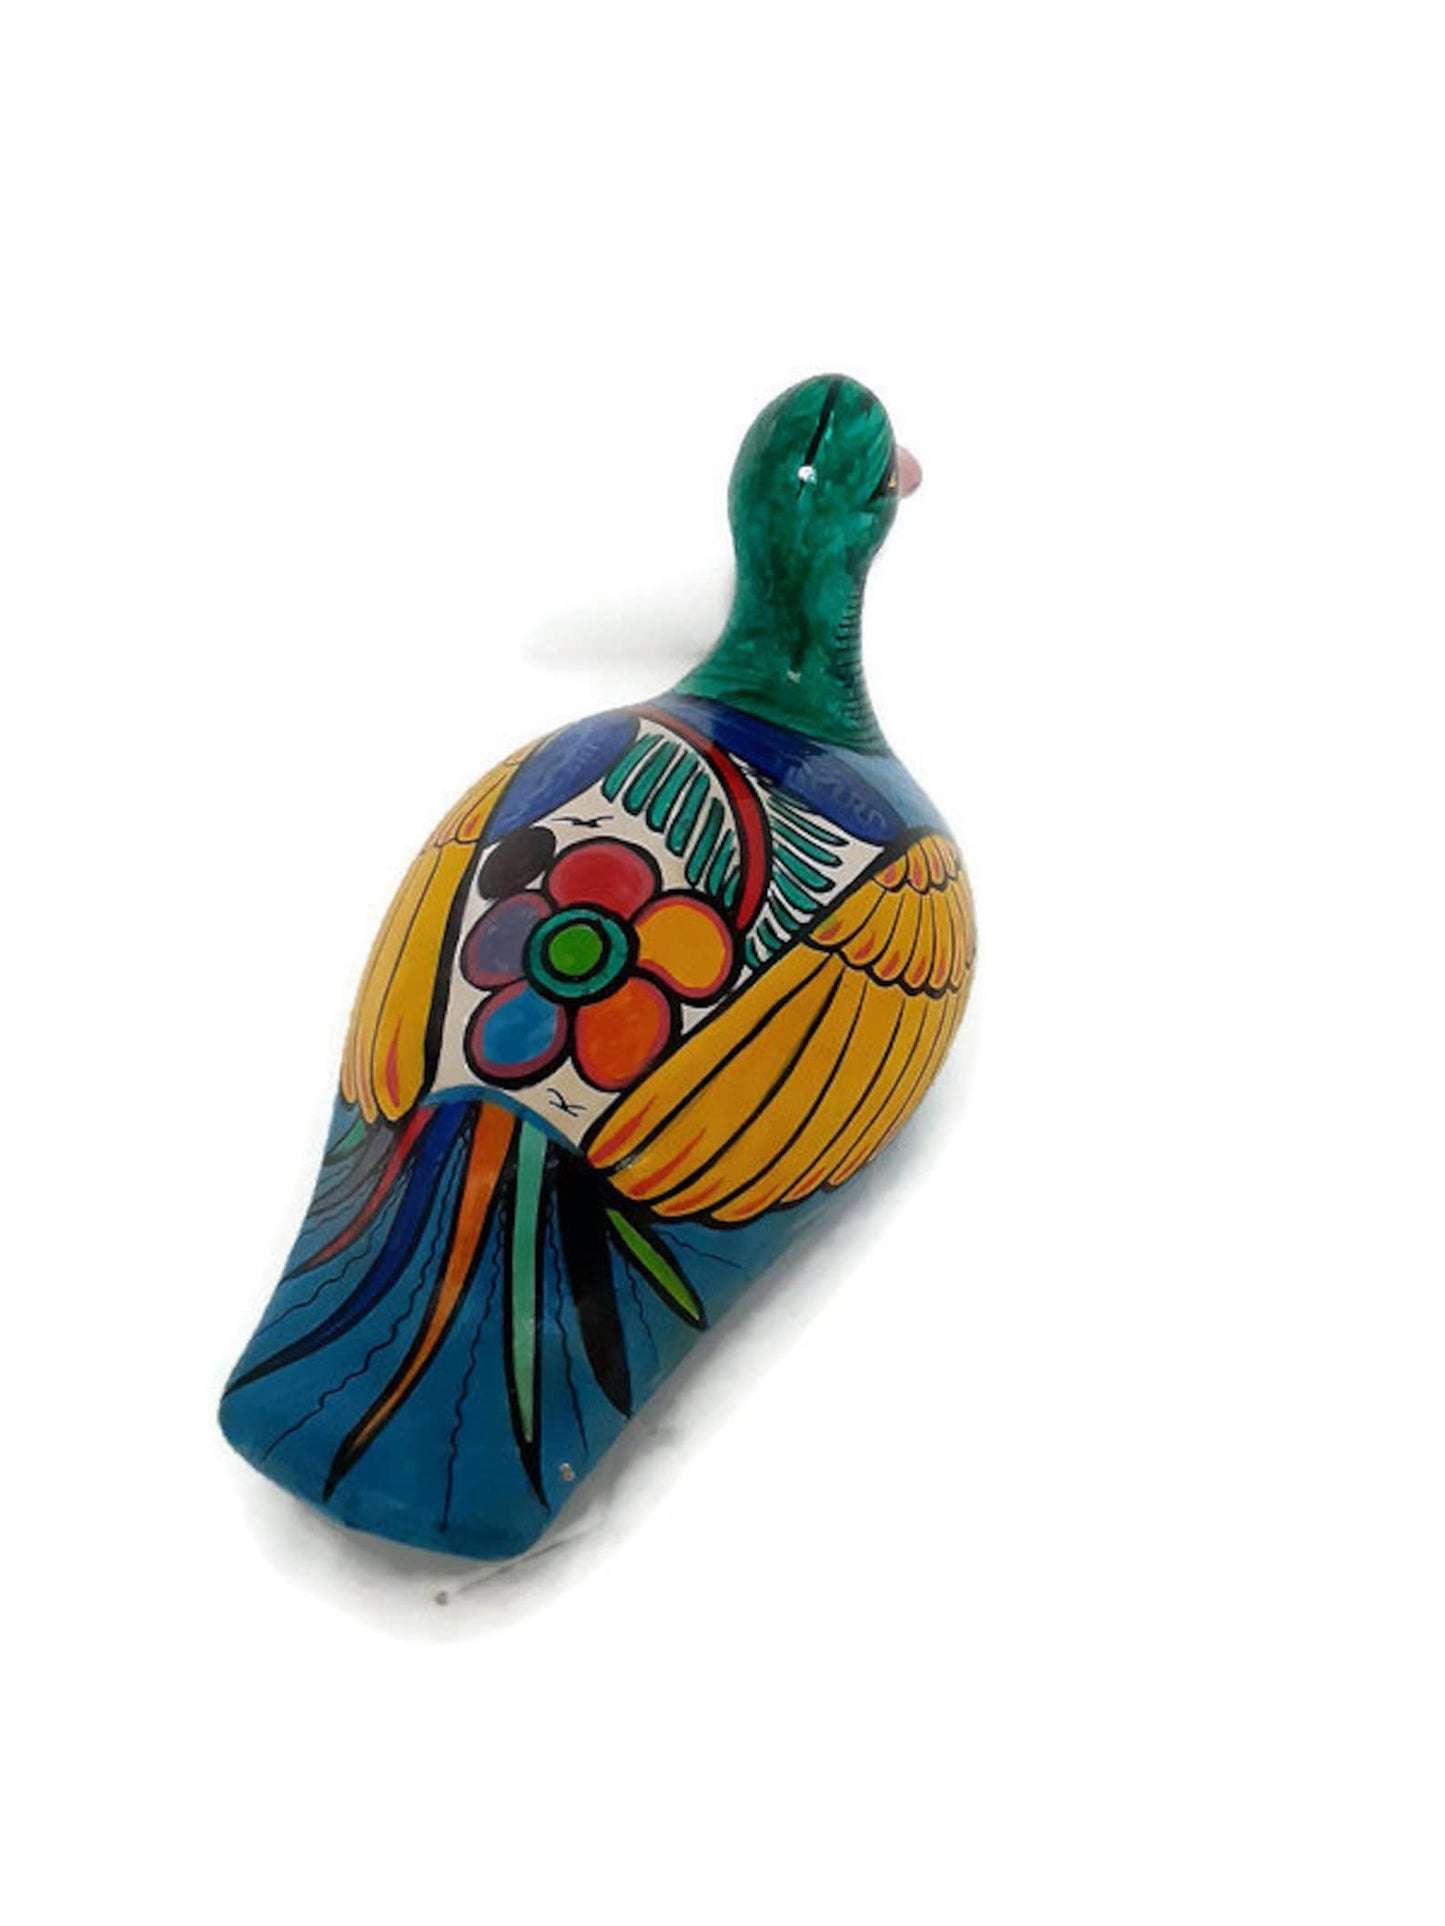 Ceramic Hand Painted Mexican Folk Art Duck